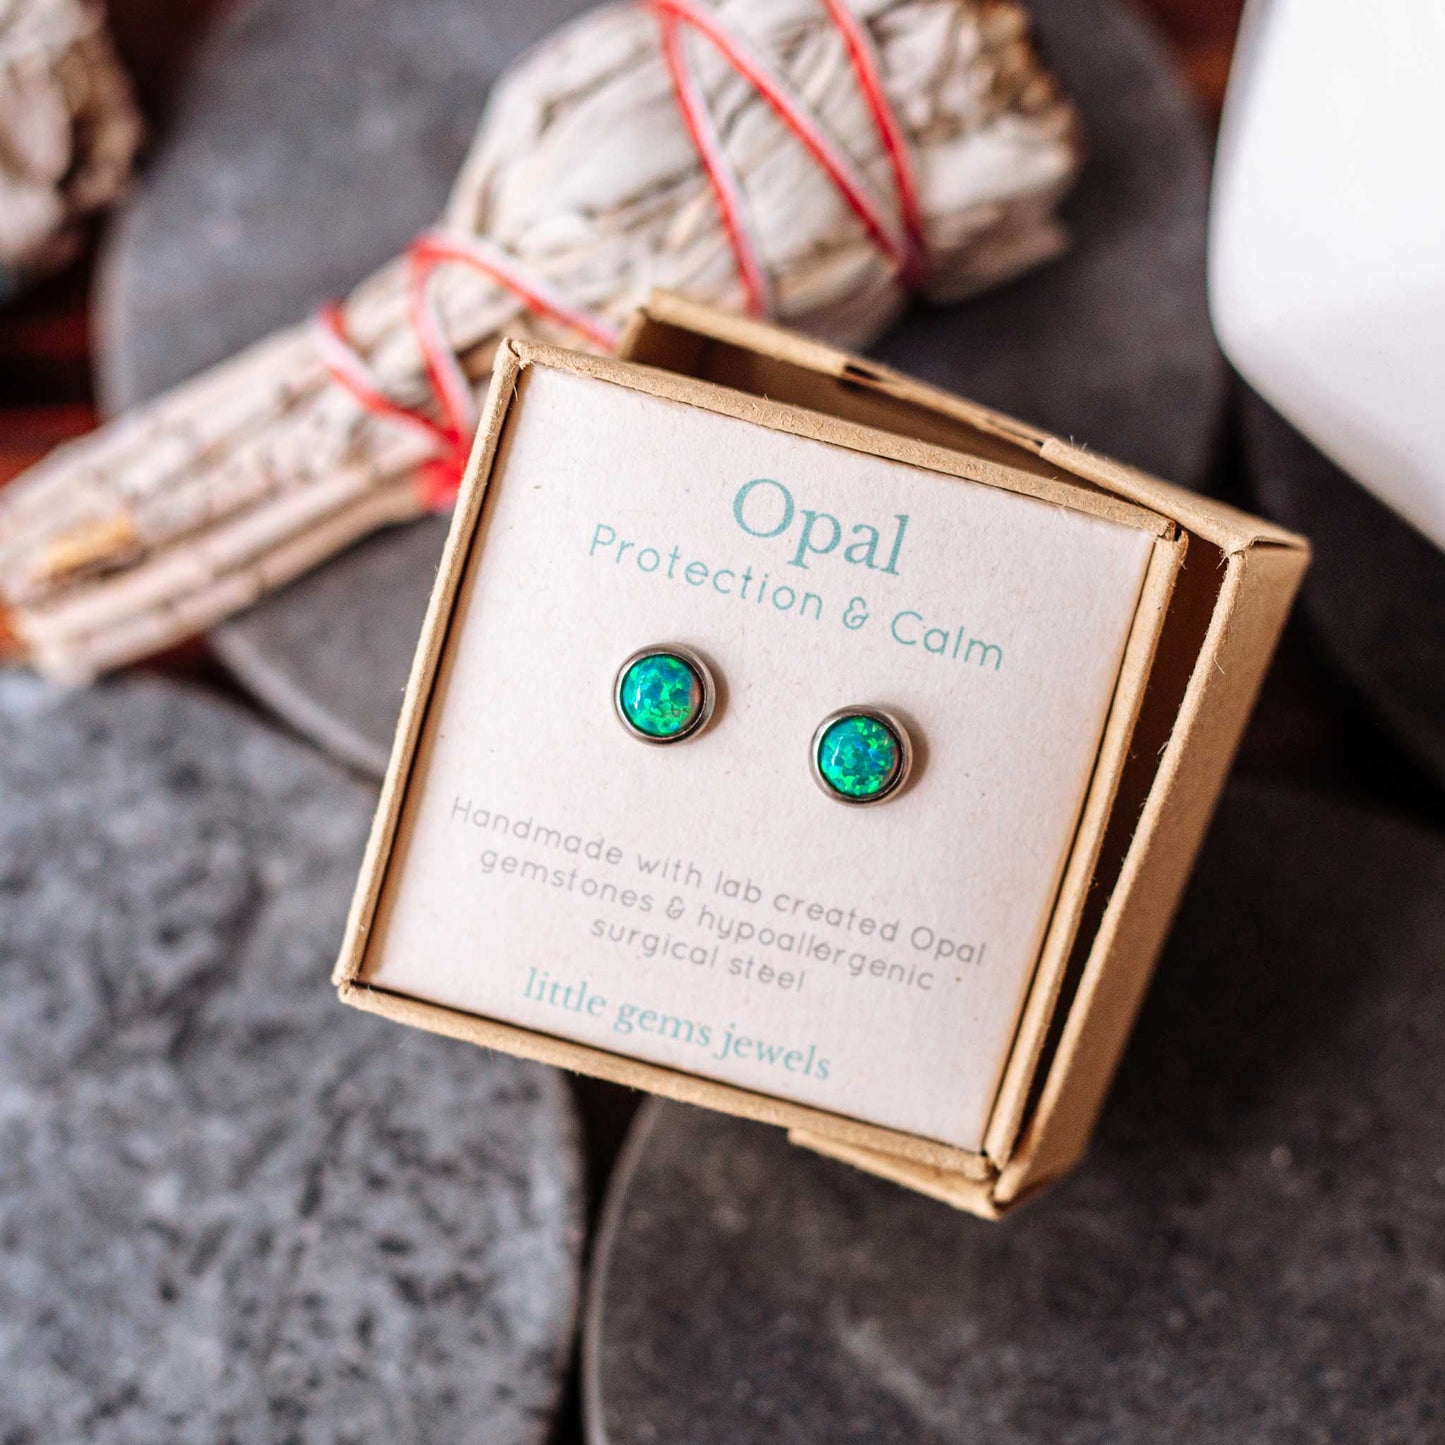 Green lab created Opal stud earrings in gift box